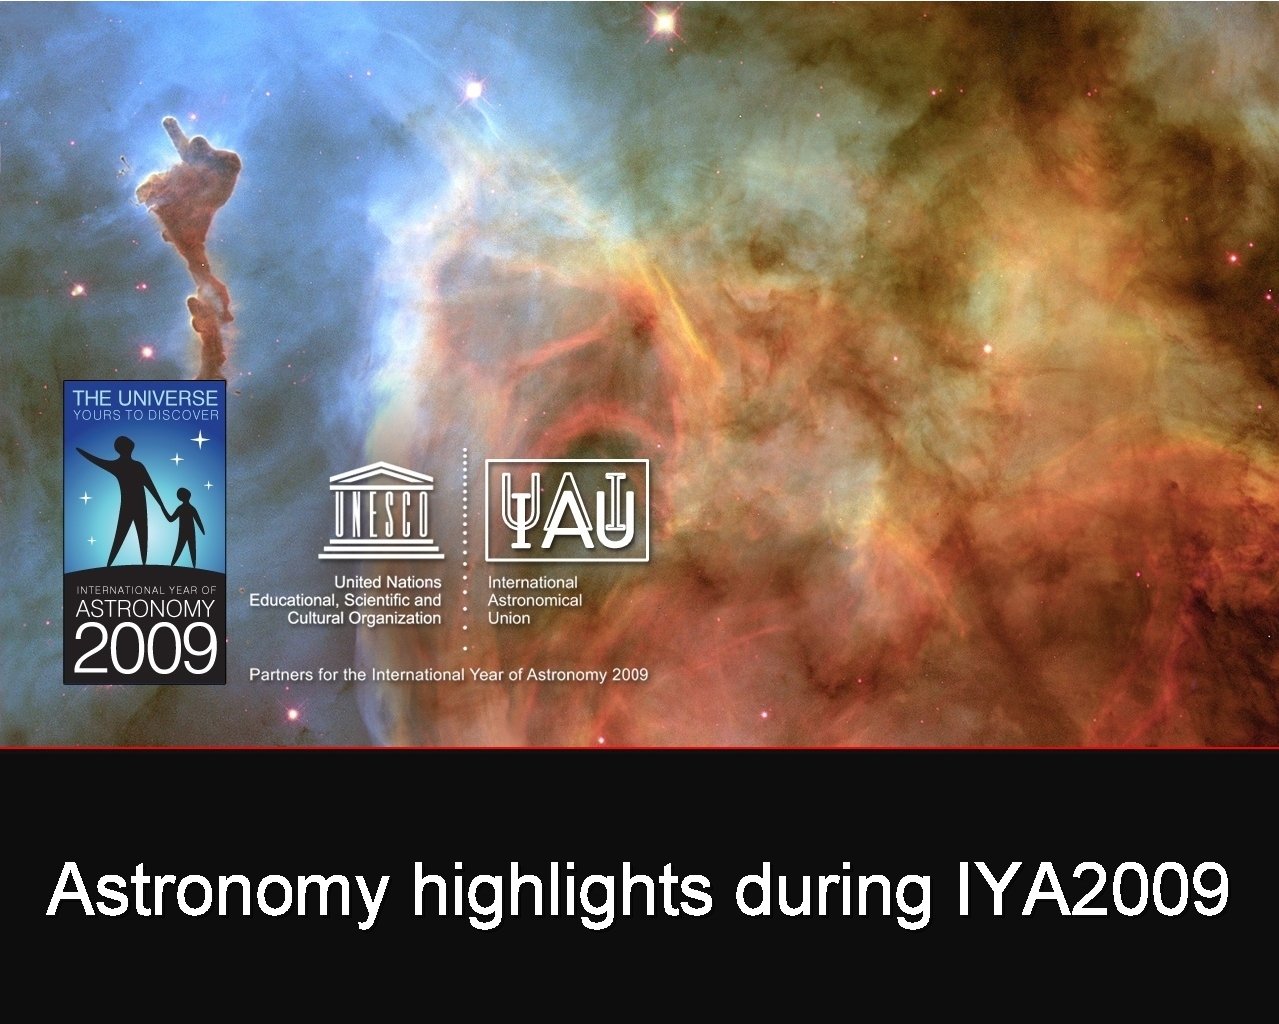 Astronomy highlights during IYA 2009 